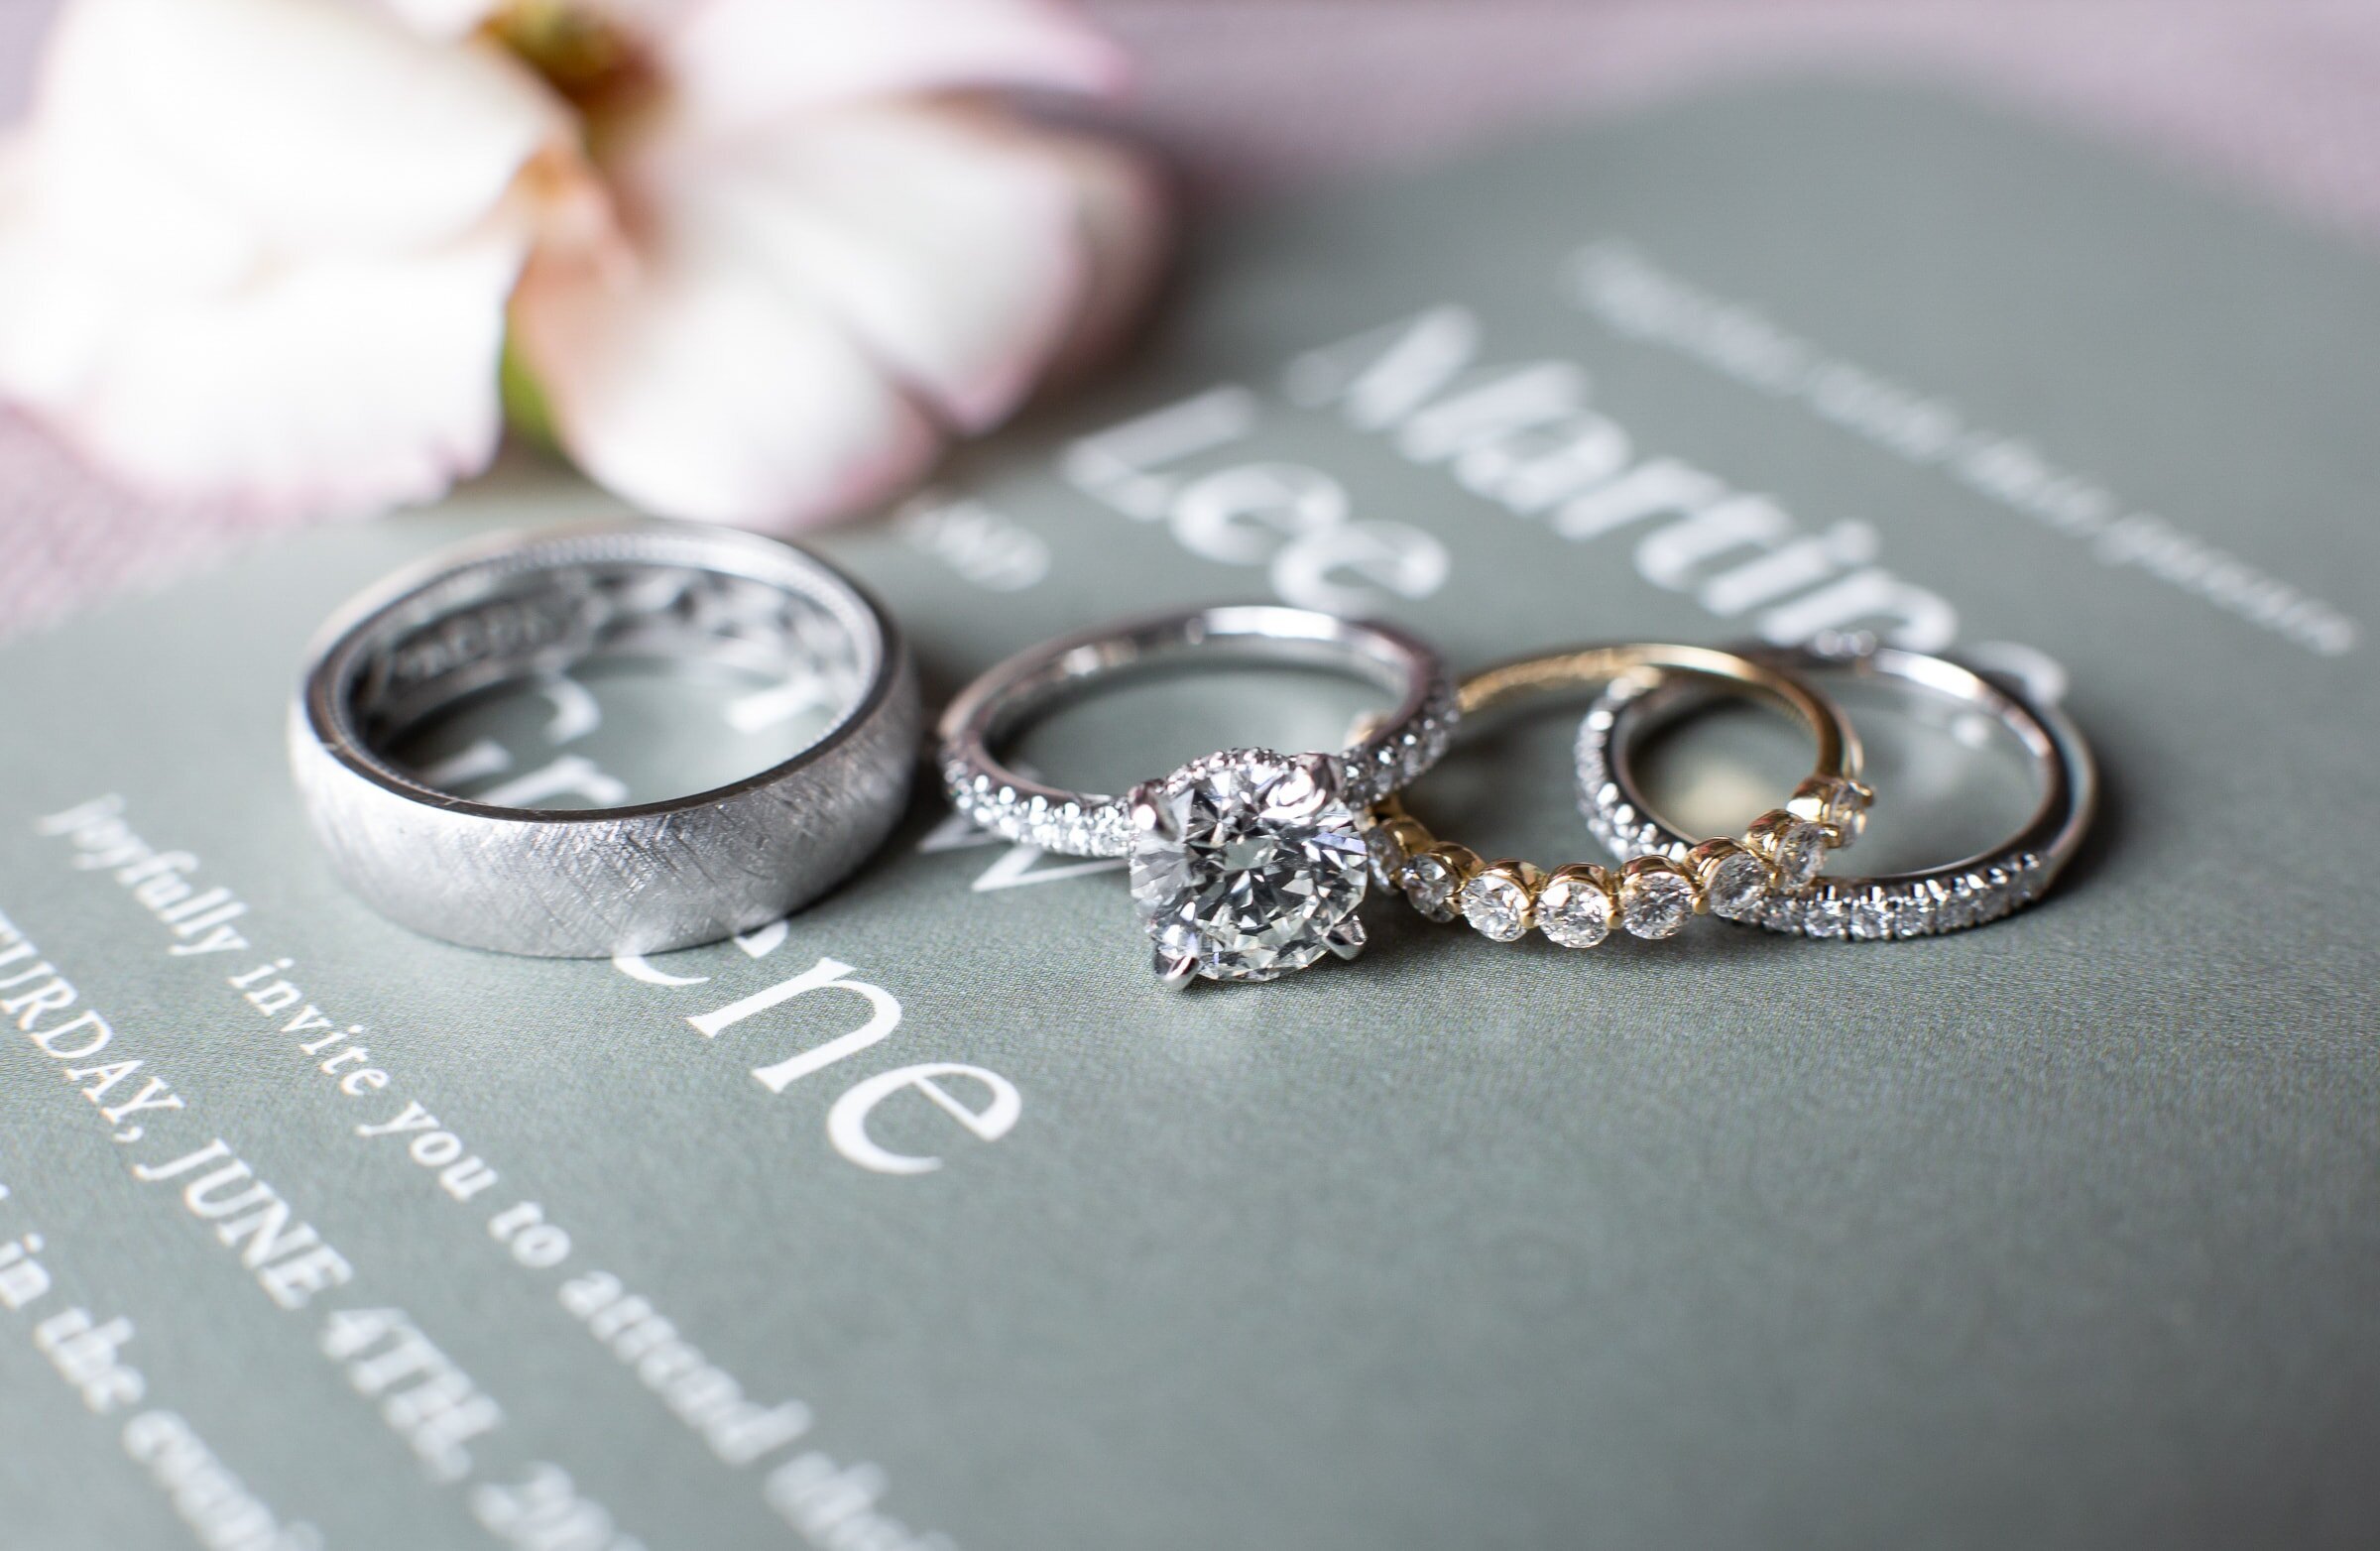 wedding rings against sage wedding invitation